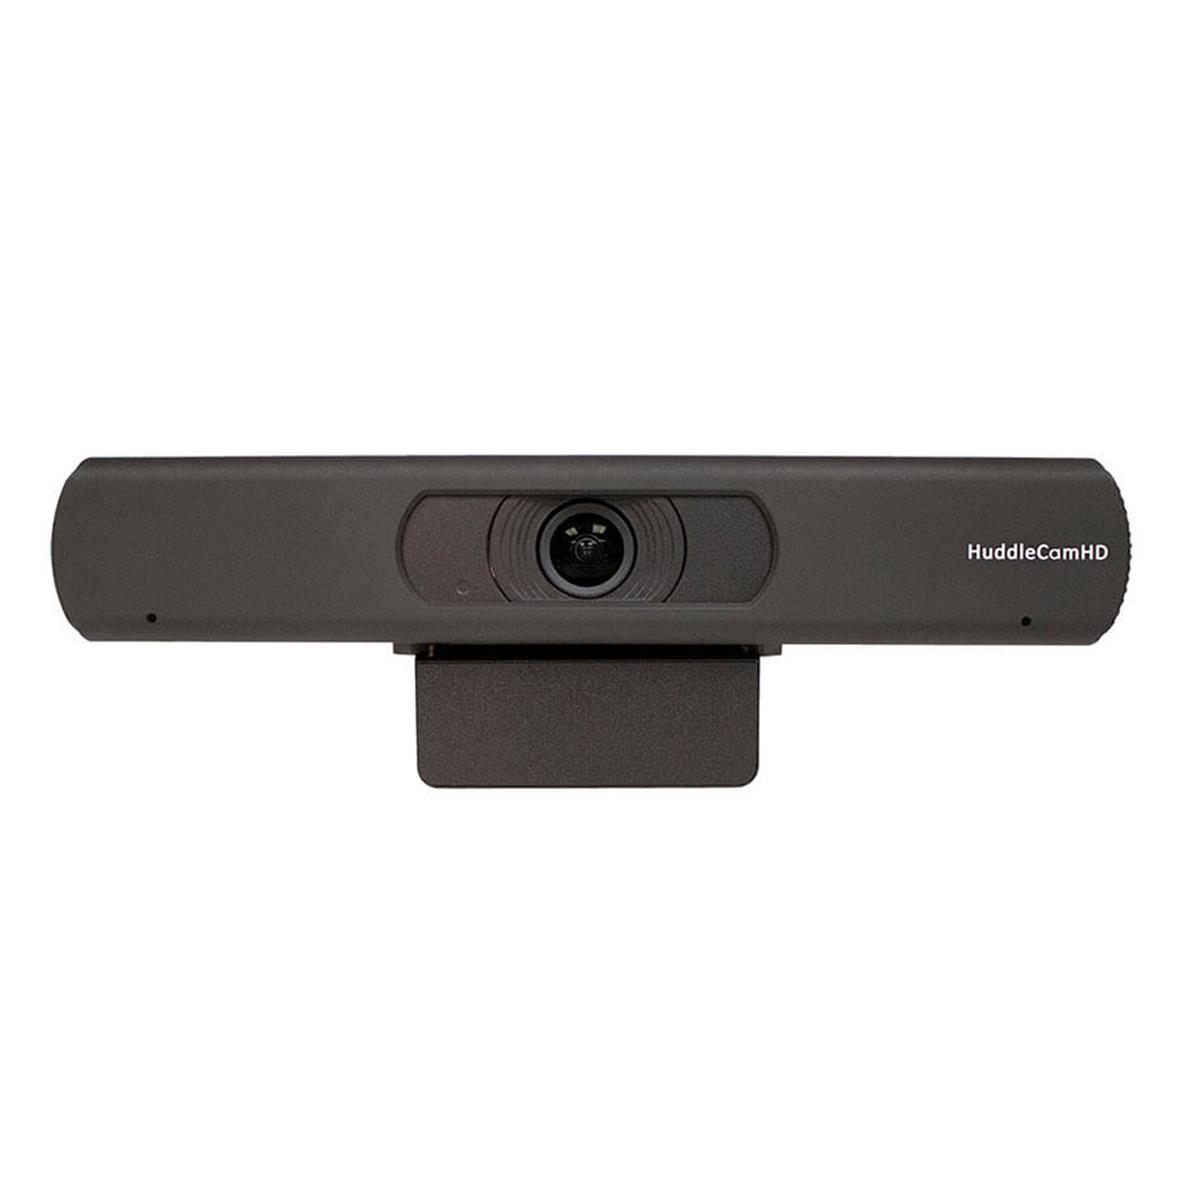 Image of HuddleCamHD Pro USB 4K EPTZ Webcam with IR Remote